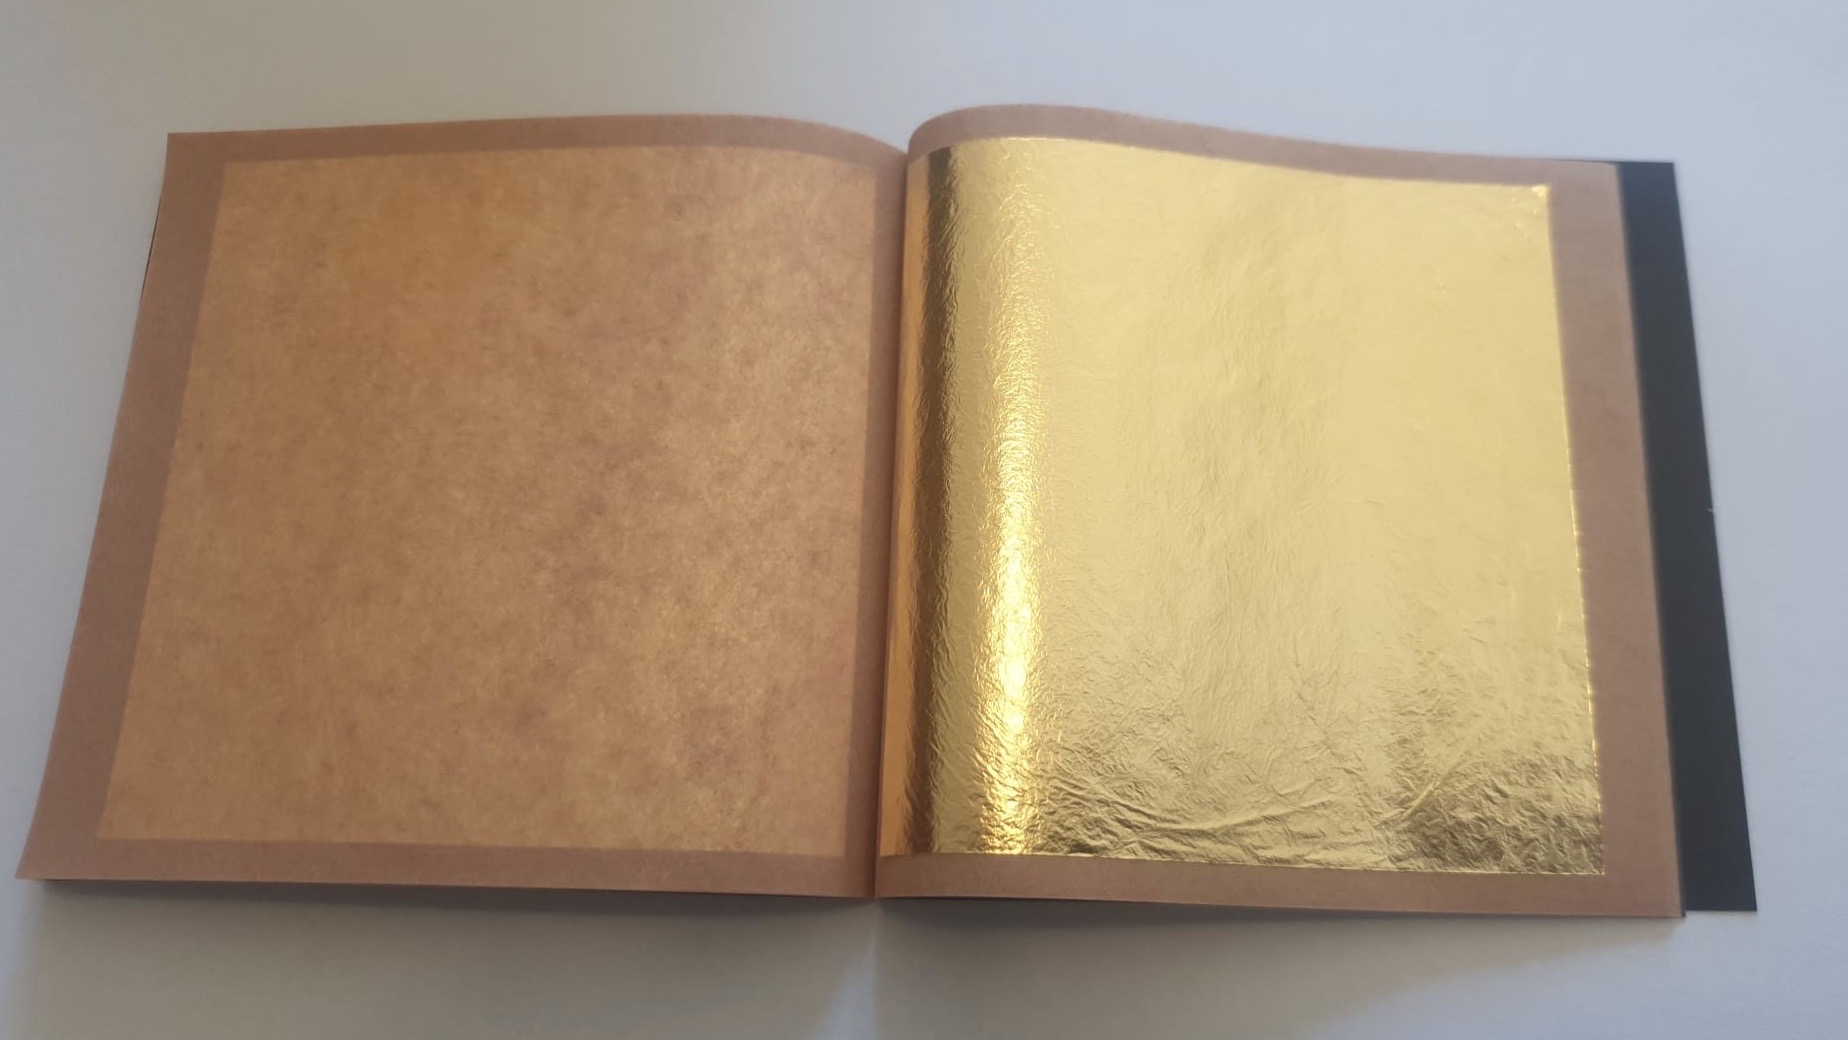 Feuilles d'or orangé 22 carats, 80 x 80mm - 25 feuilles d'or transfert 29043